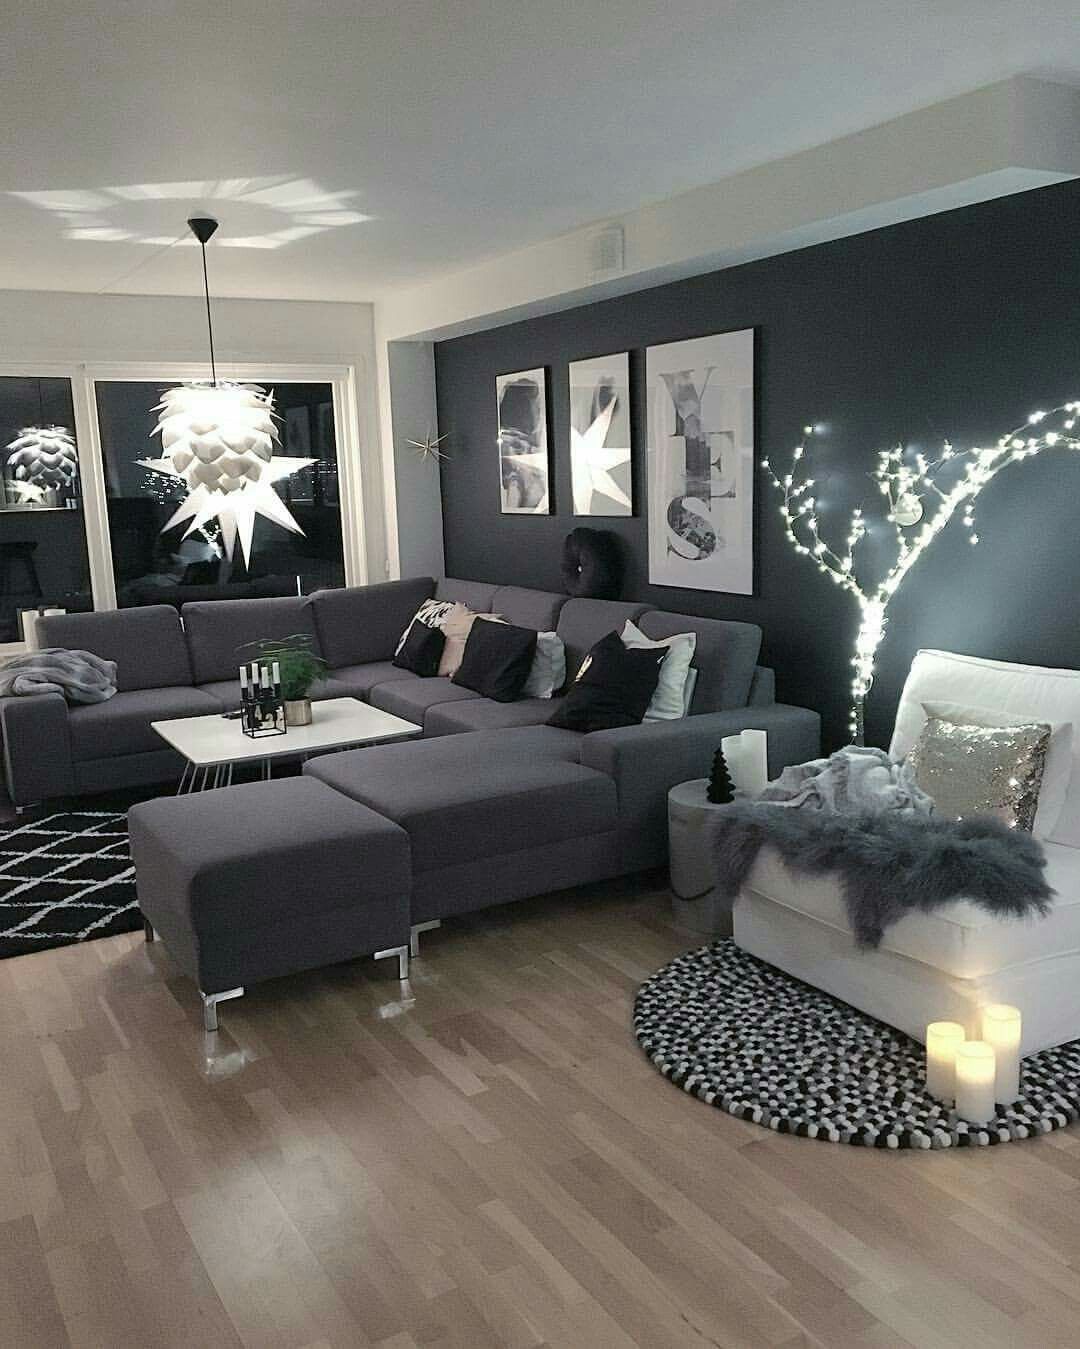 Quaint black and gray living room ideas